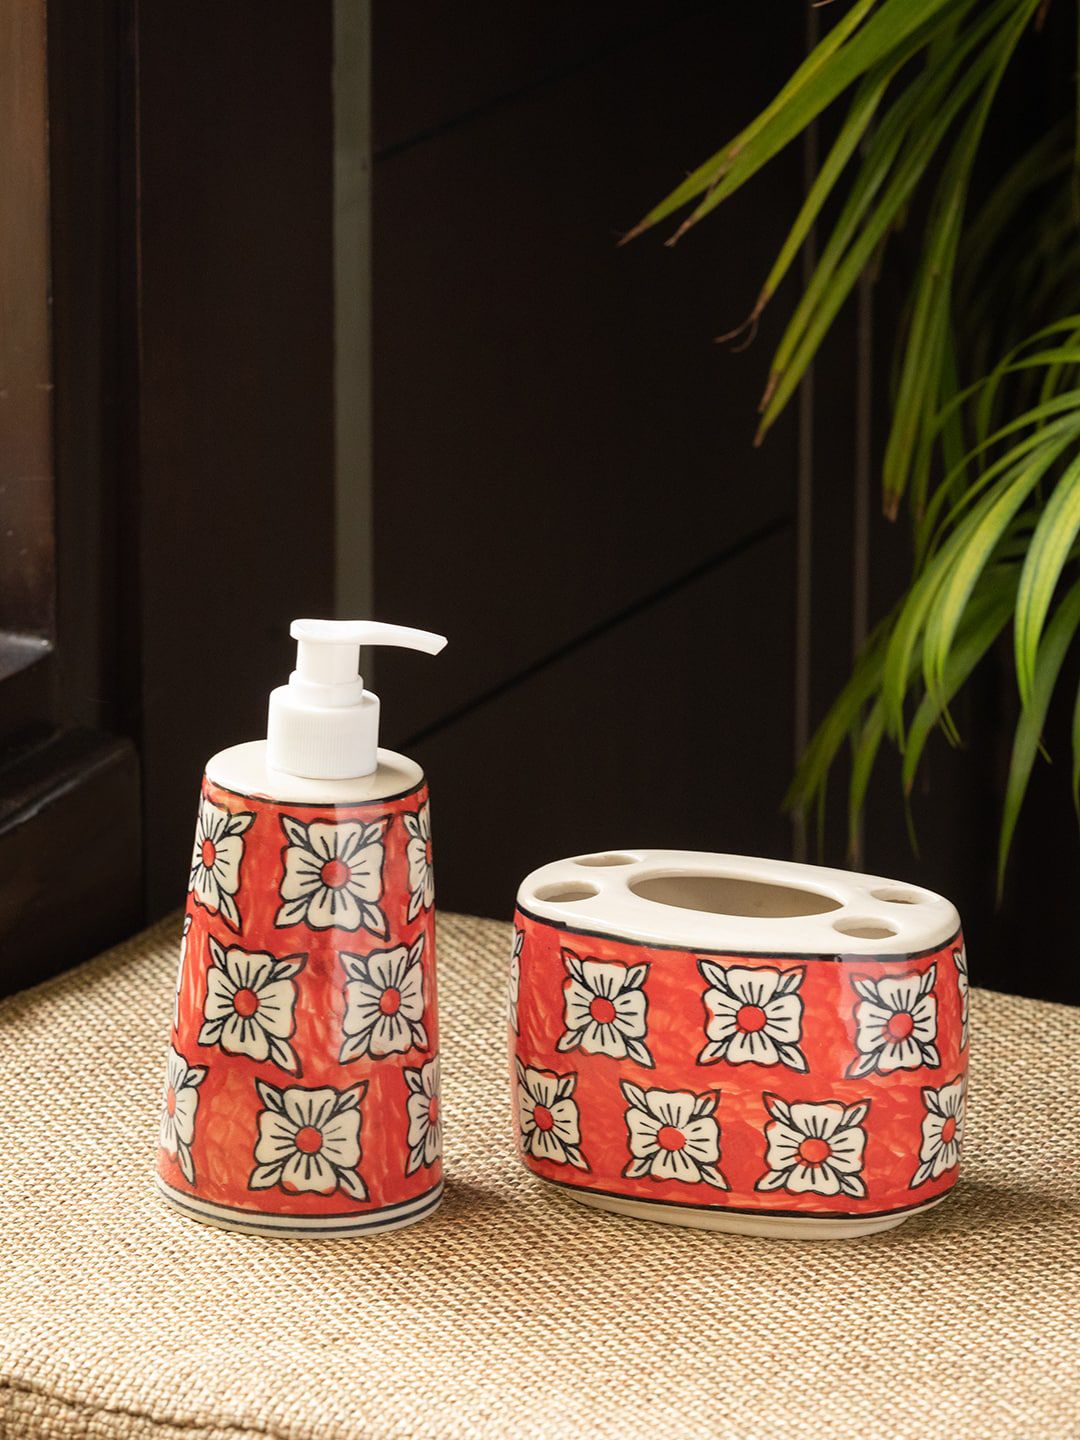 ExclusiveLane Pack of 2 Red & White Handpainted Ceramic Bathroom Accessories Price in India